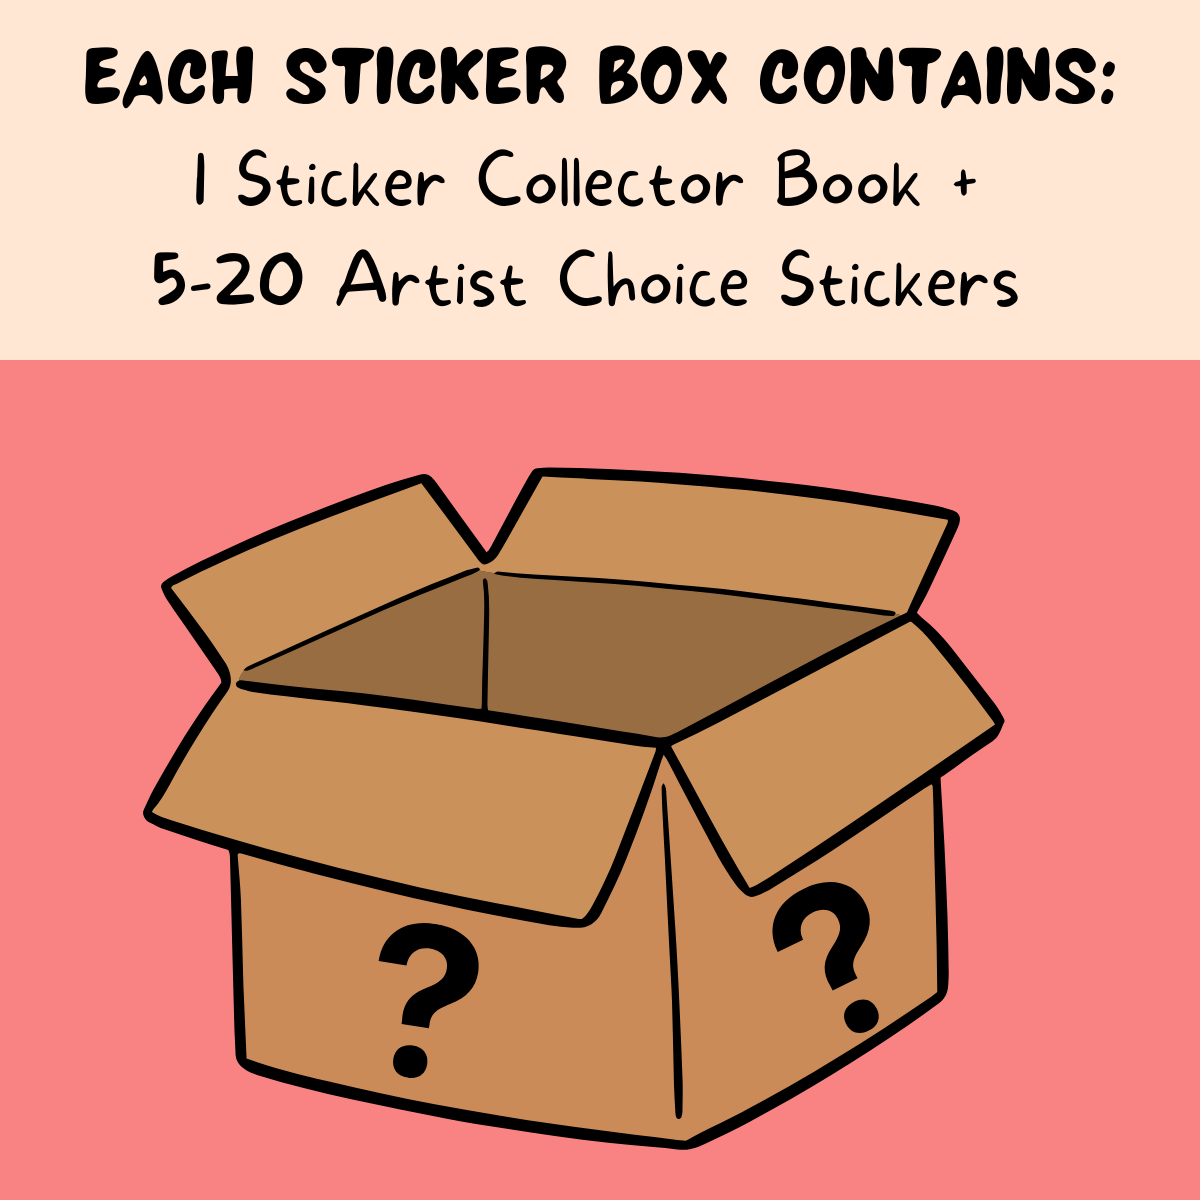 Big Sticker Collector Box | Deviant Kreations - Deviantkreations